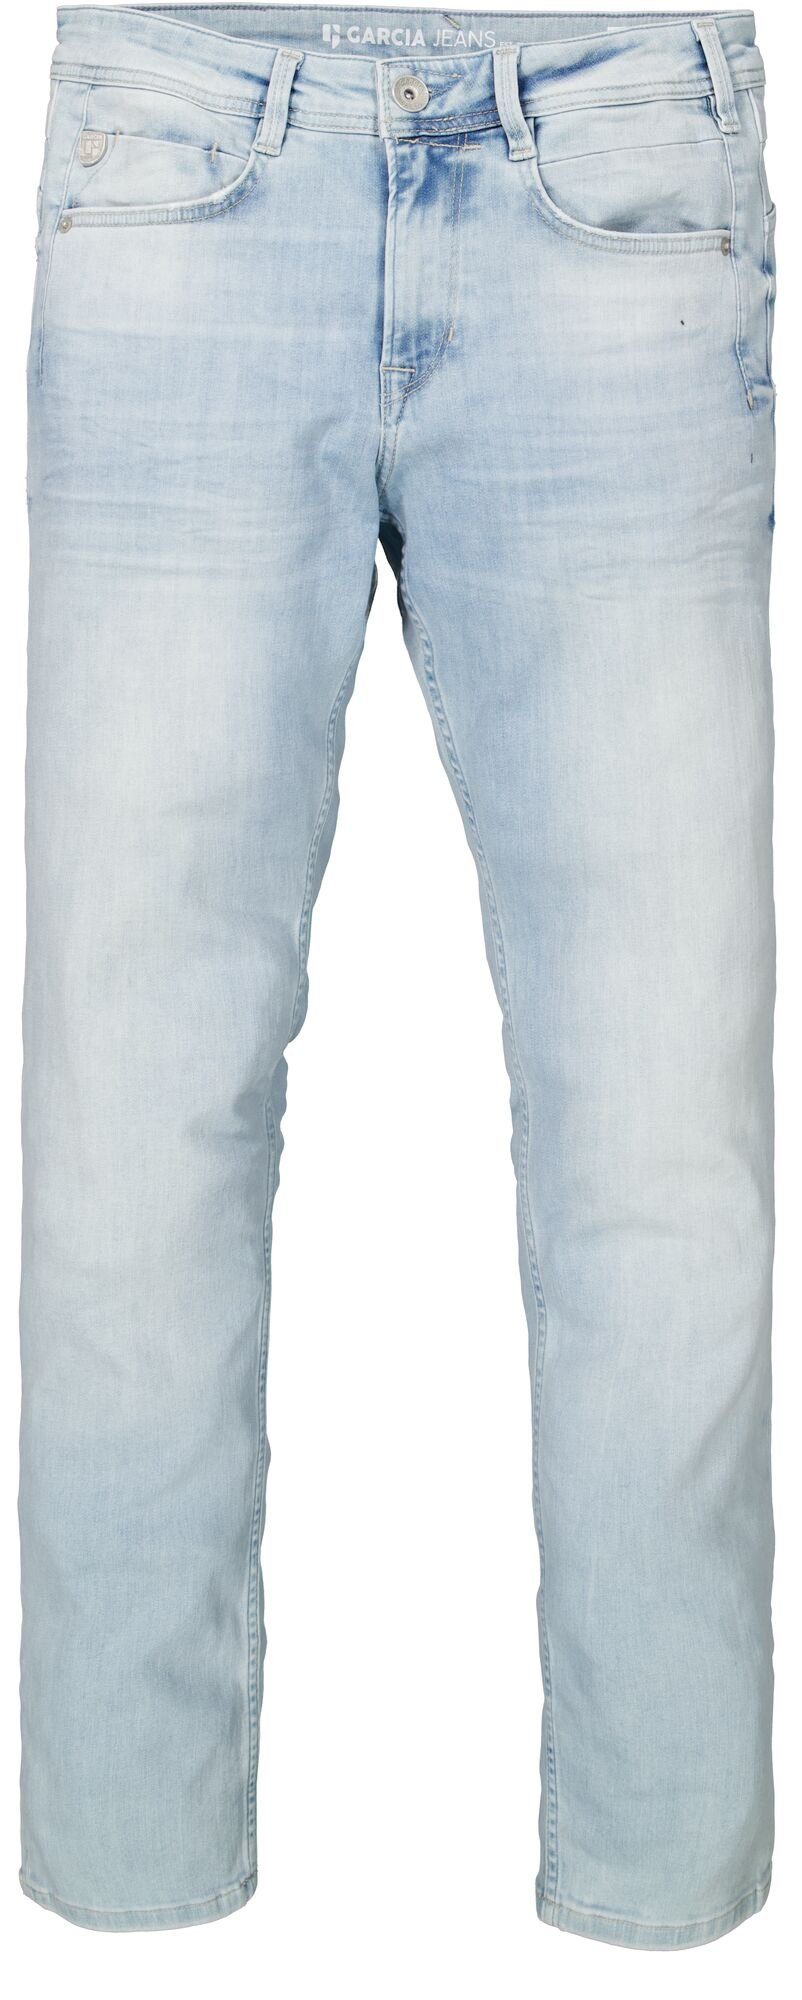 GARCIA JEANS 5-Pocket-Jeans 690.3211 bleached ROCKO GARCIA - Motion Denim